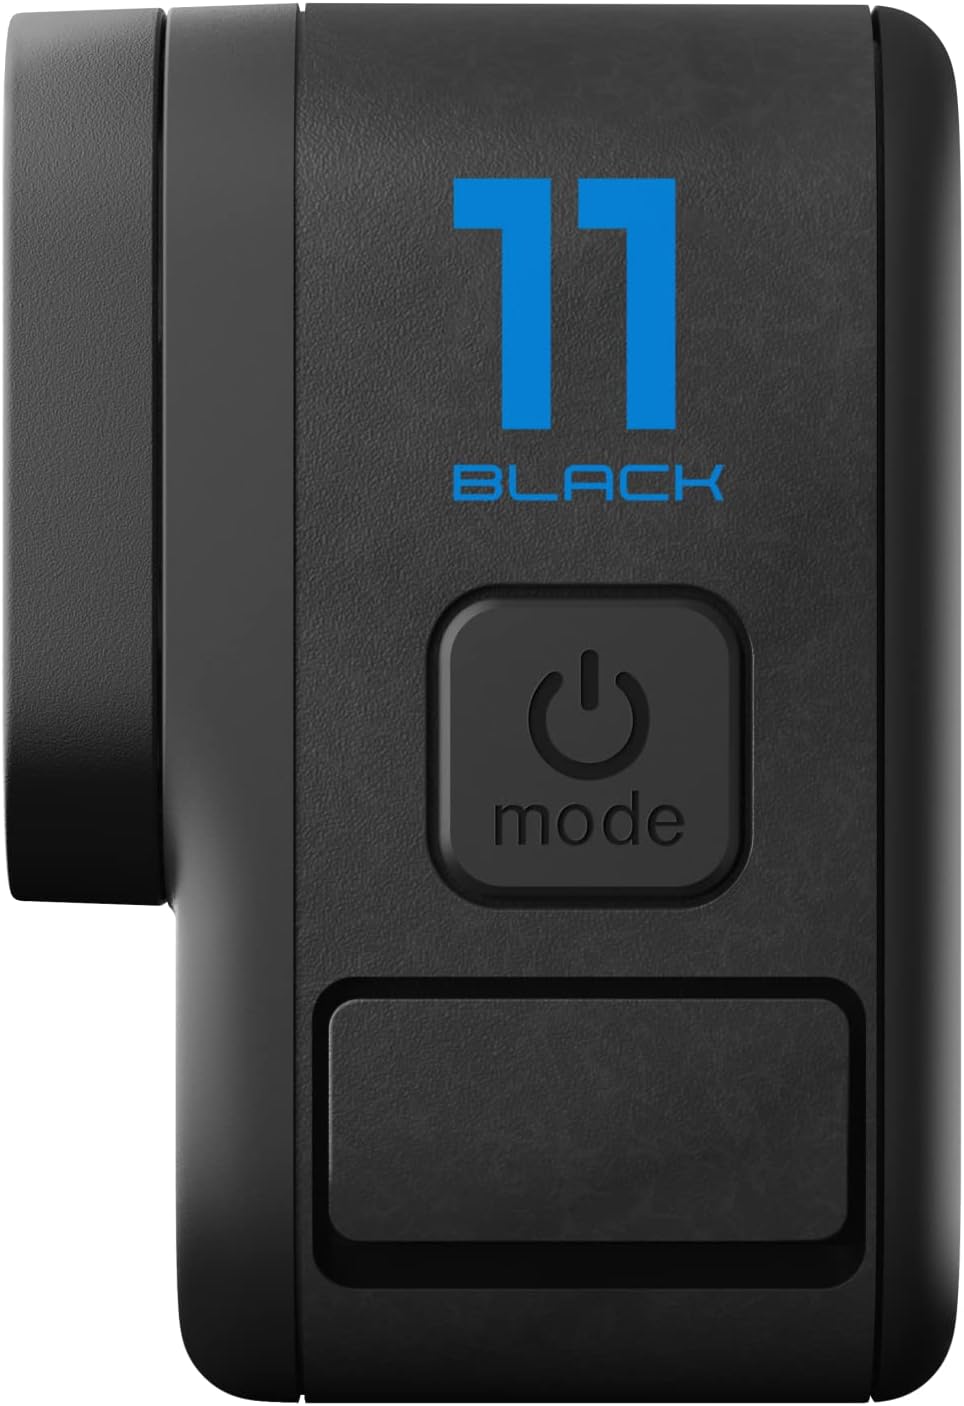 GoPro HERO11 Black - Wasserdichte Action-Kamera mit 5,3K60 Ultra HD-Video, 27 MP Fotos, 1/1,9-Zoll-Bildsensor, Live-Streaming, Webcam, Stabilisierung - Instock Germany